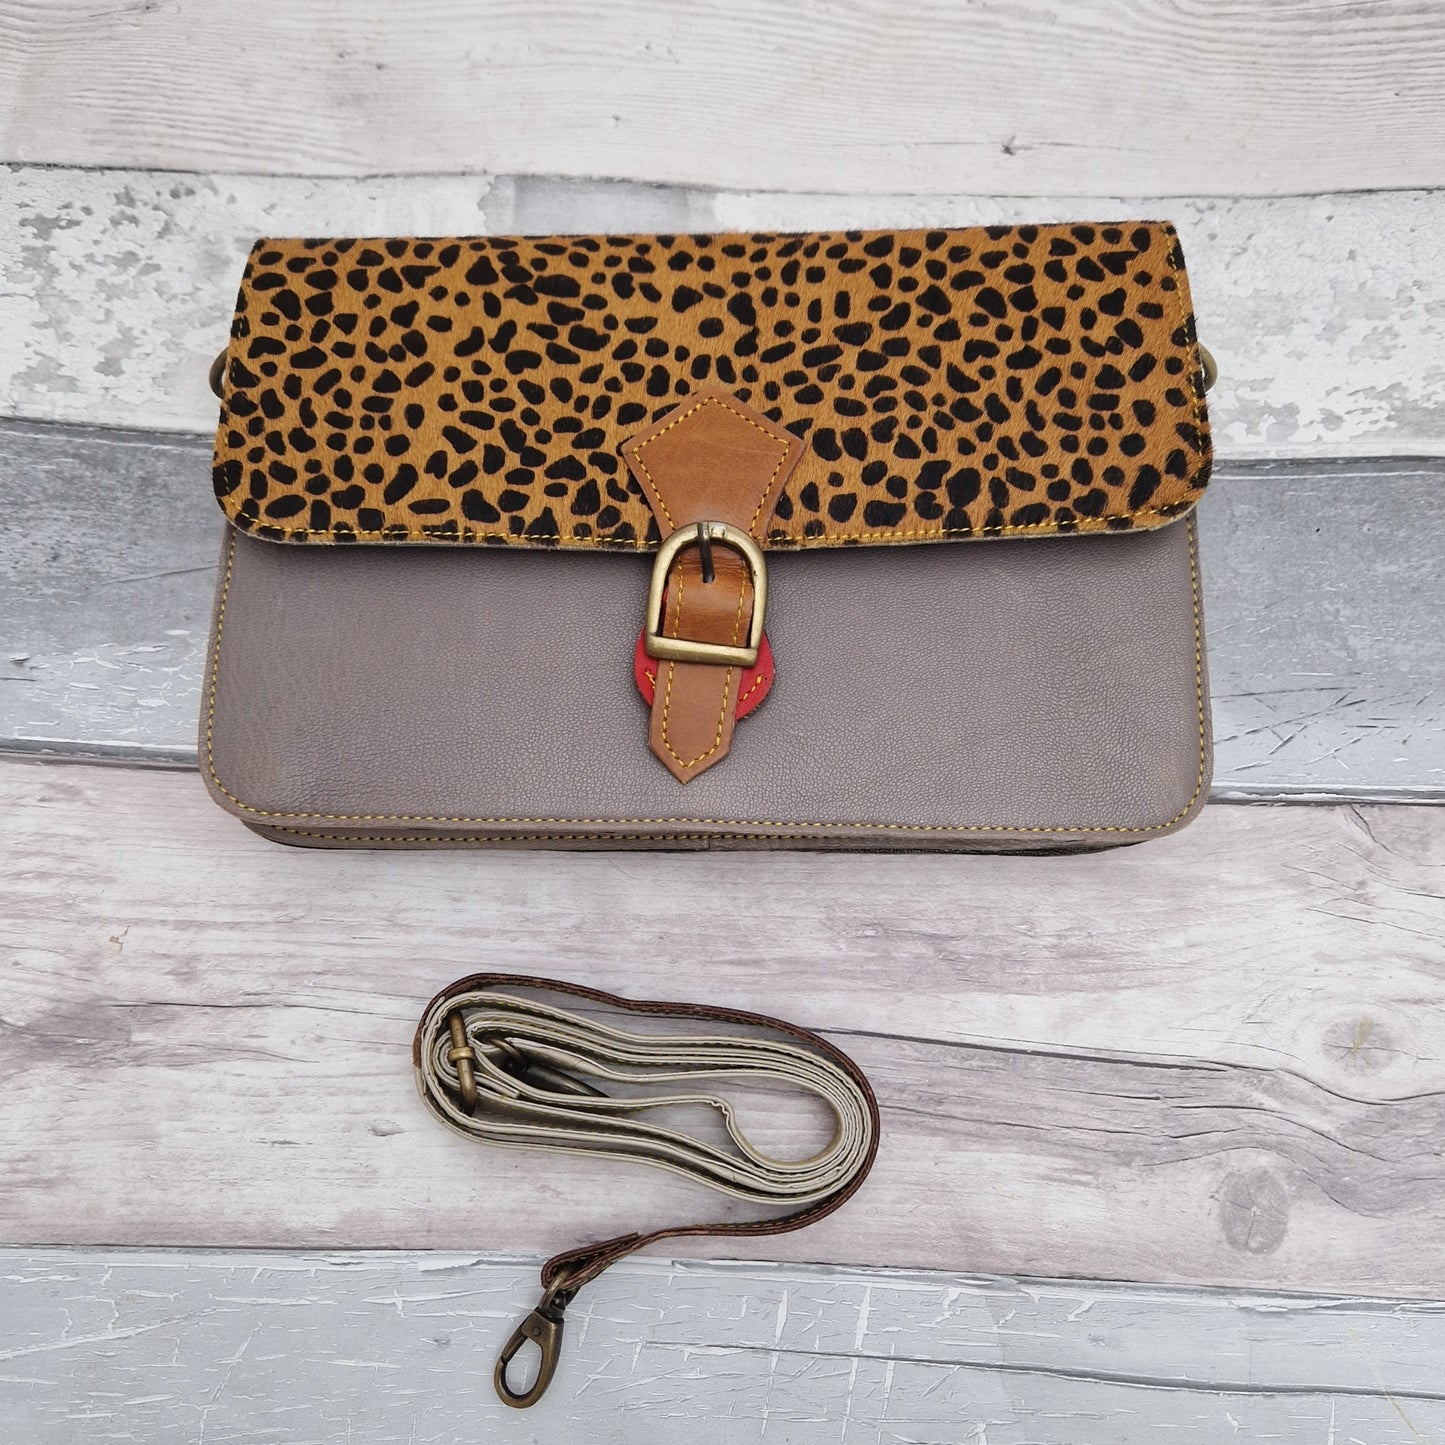 Grey leather handbag featuring a textured Cheetah print panel.